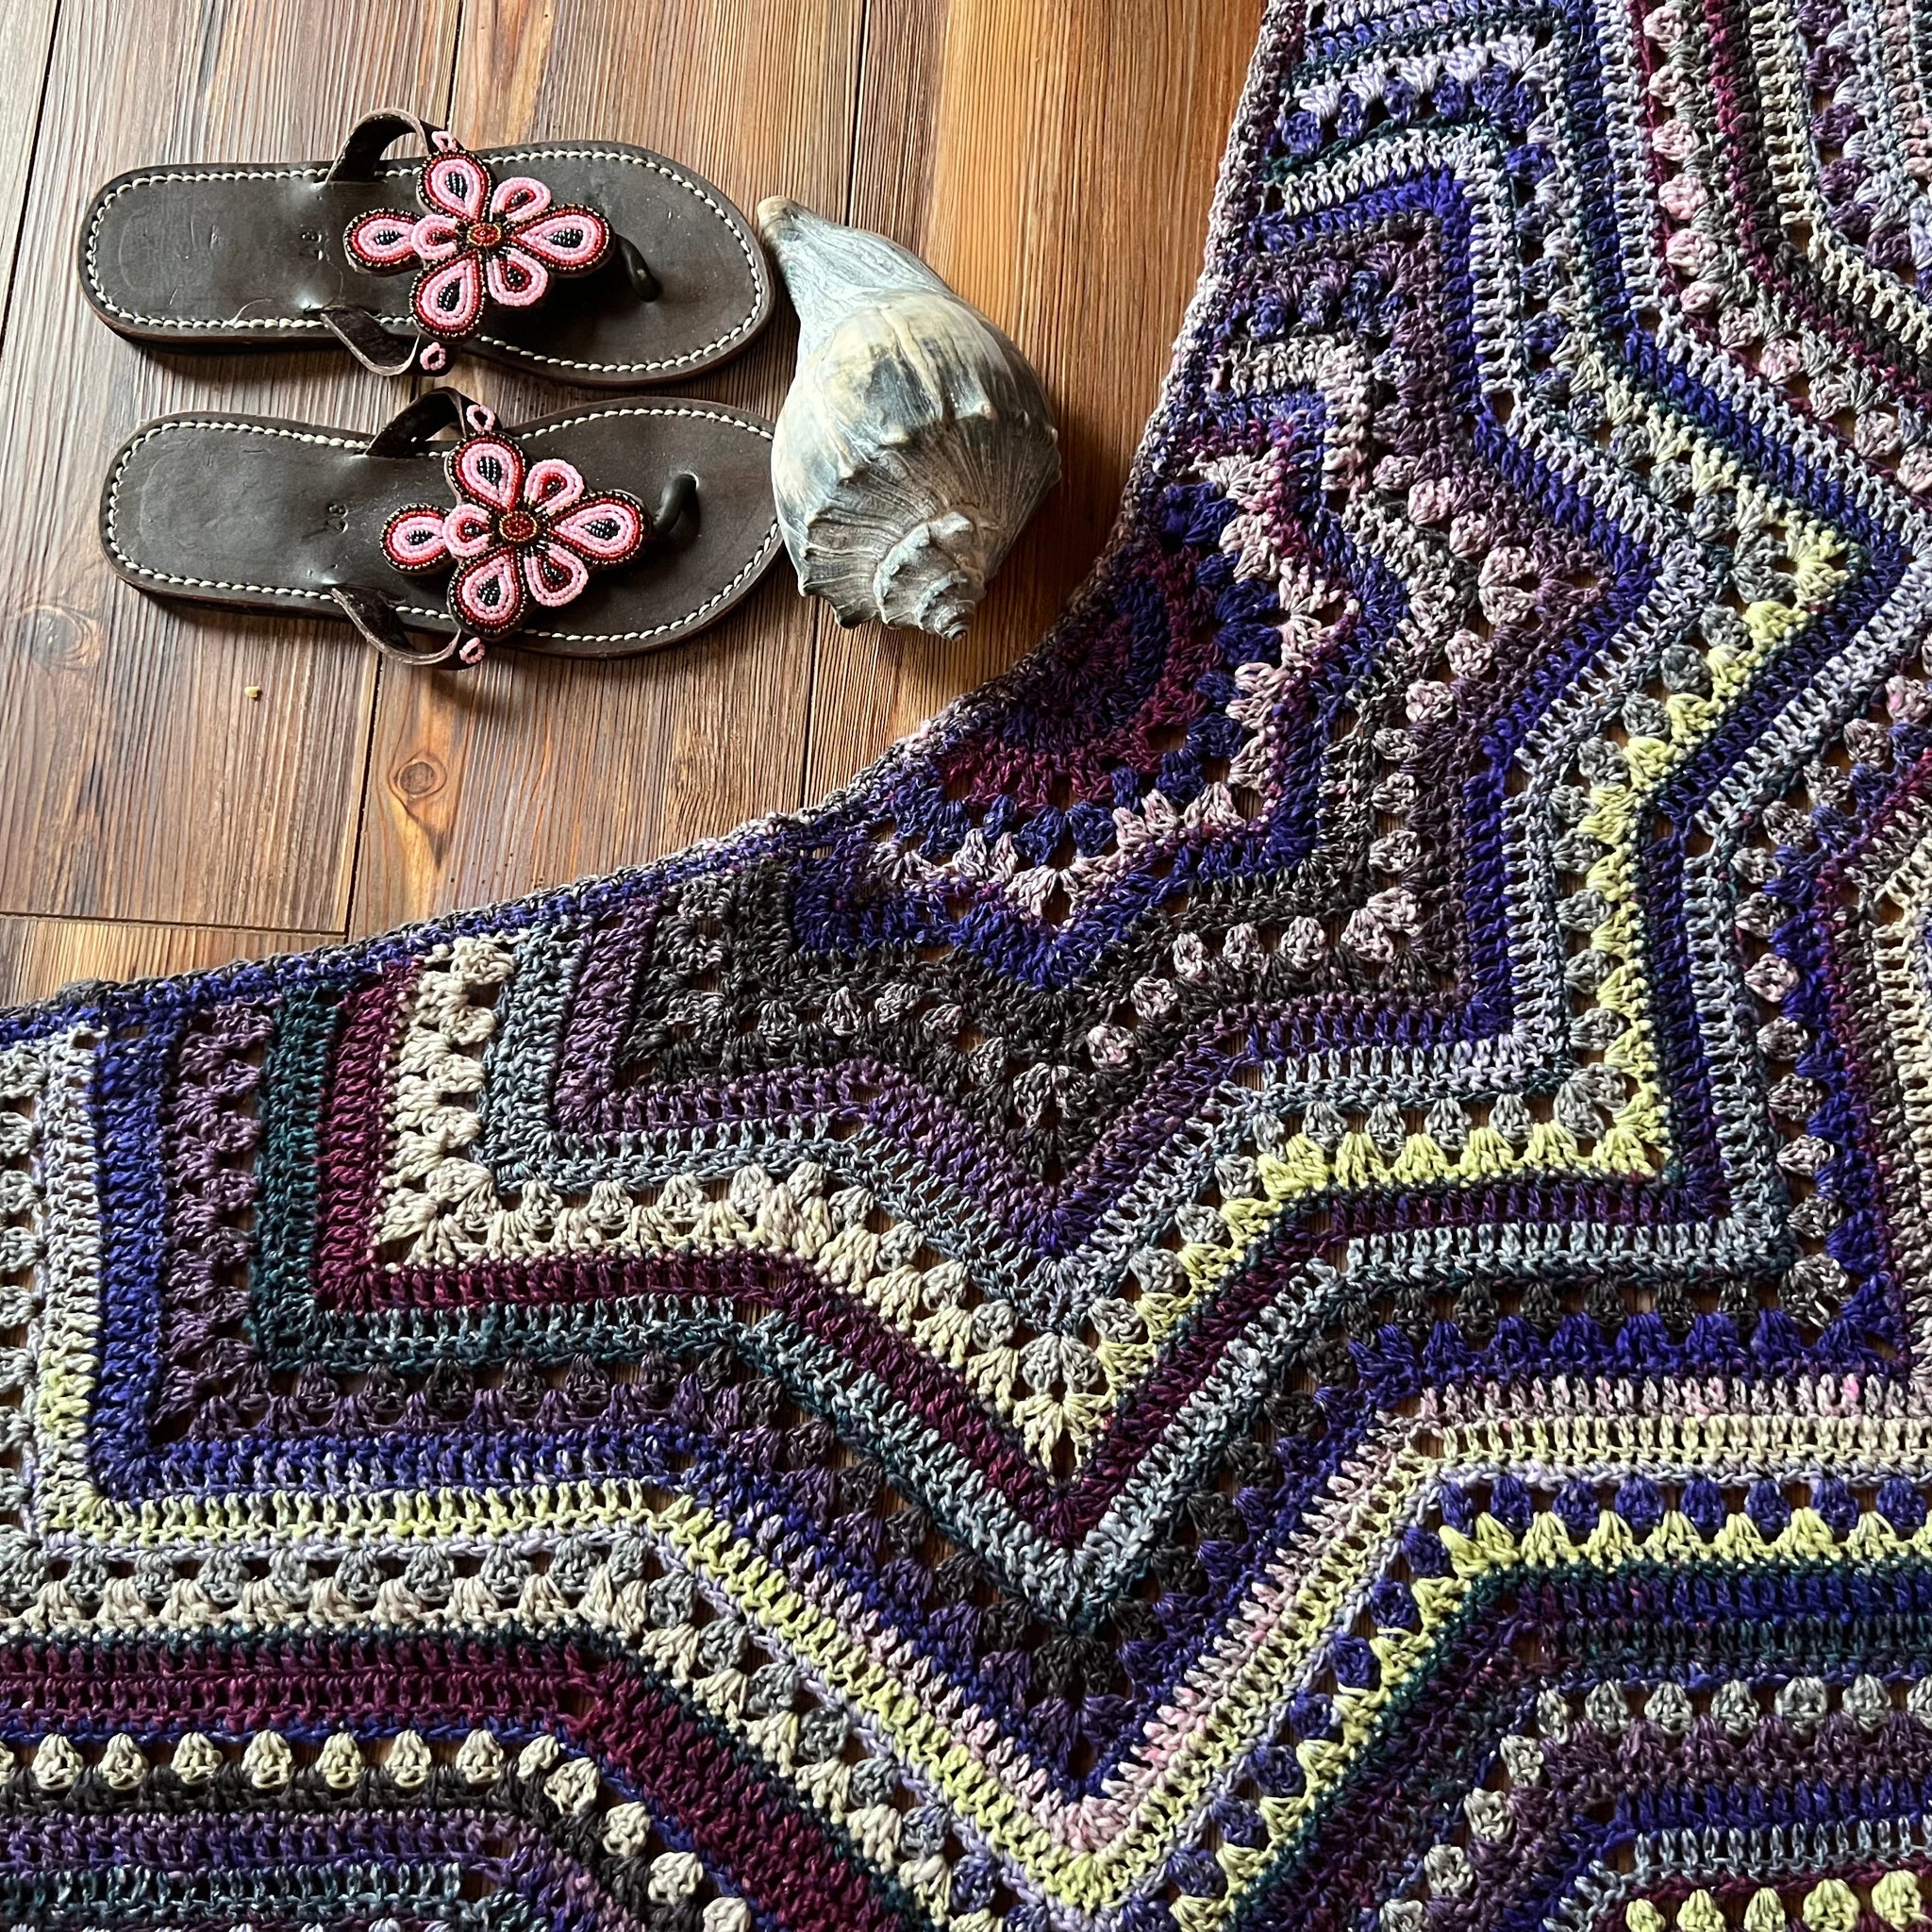 6-Day Star Shawl Crochet Pattern